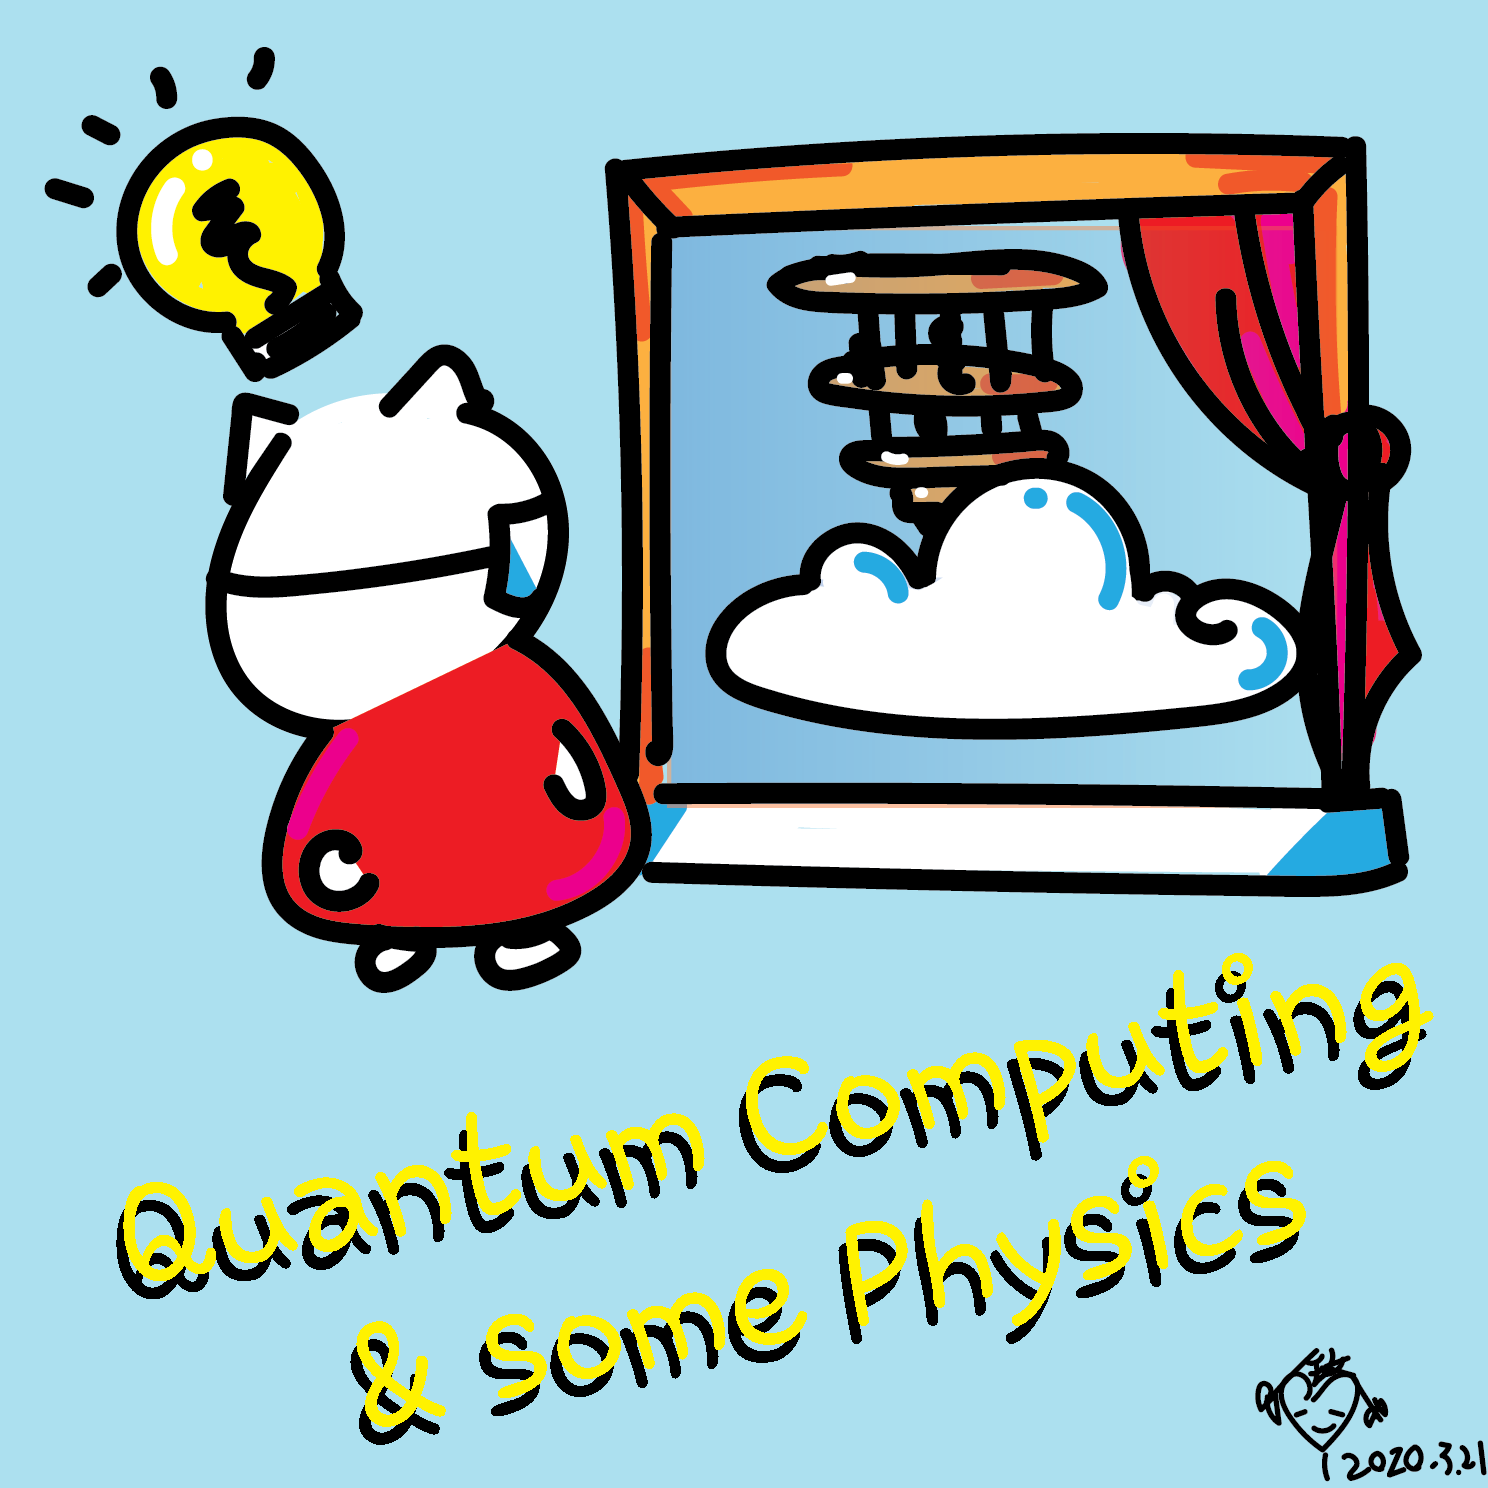 An Introduction to Quantum Computing Through Comics